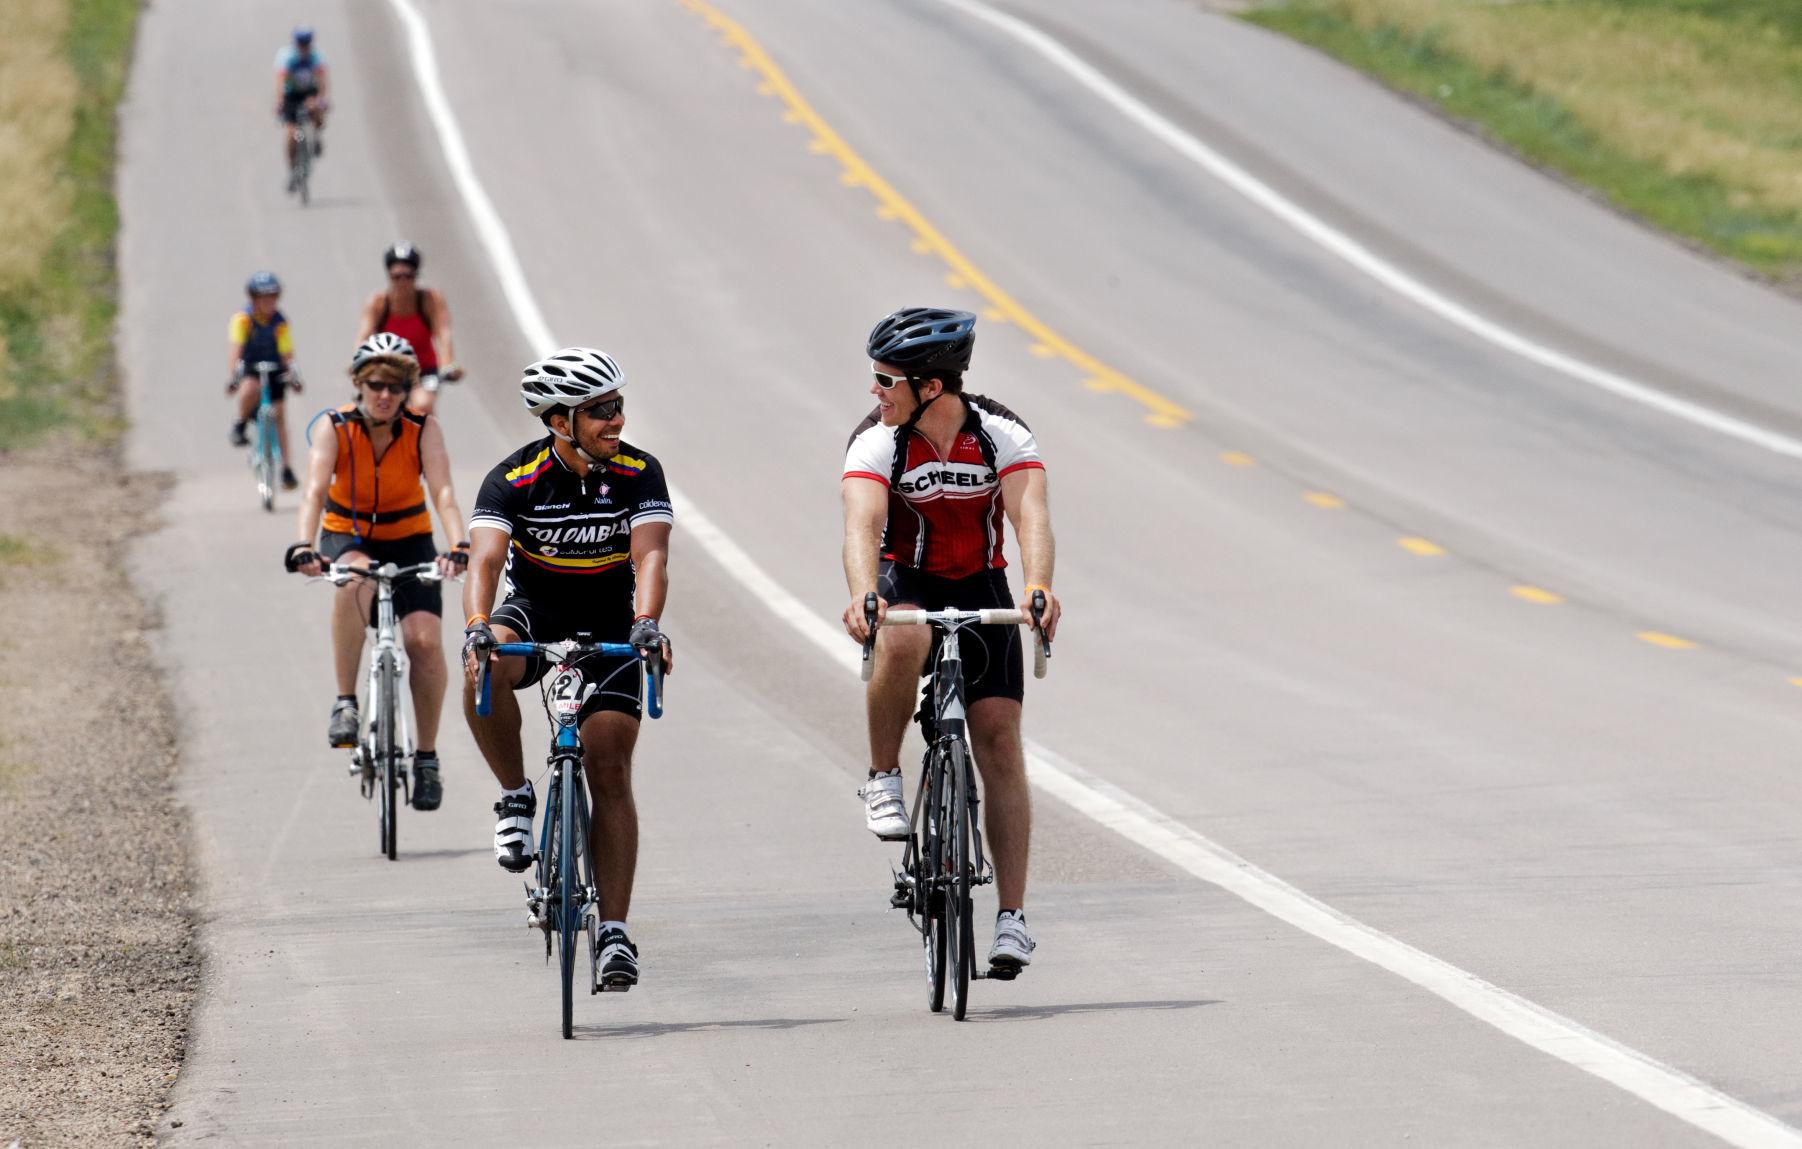 Bicycle Ride Across Nebraska under new organizers for 2019 ride